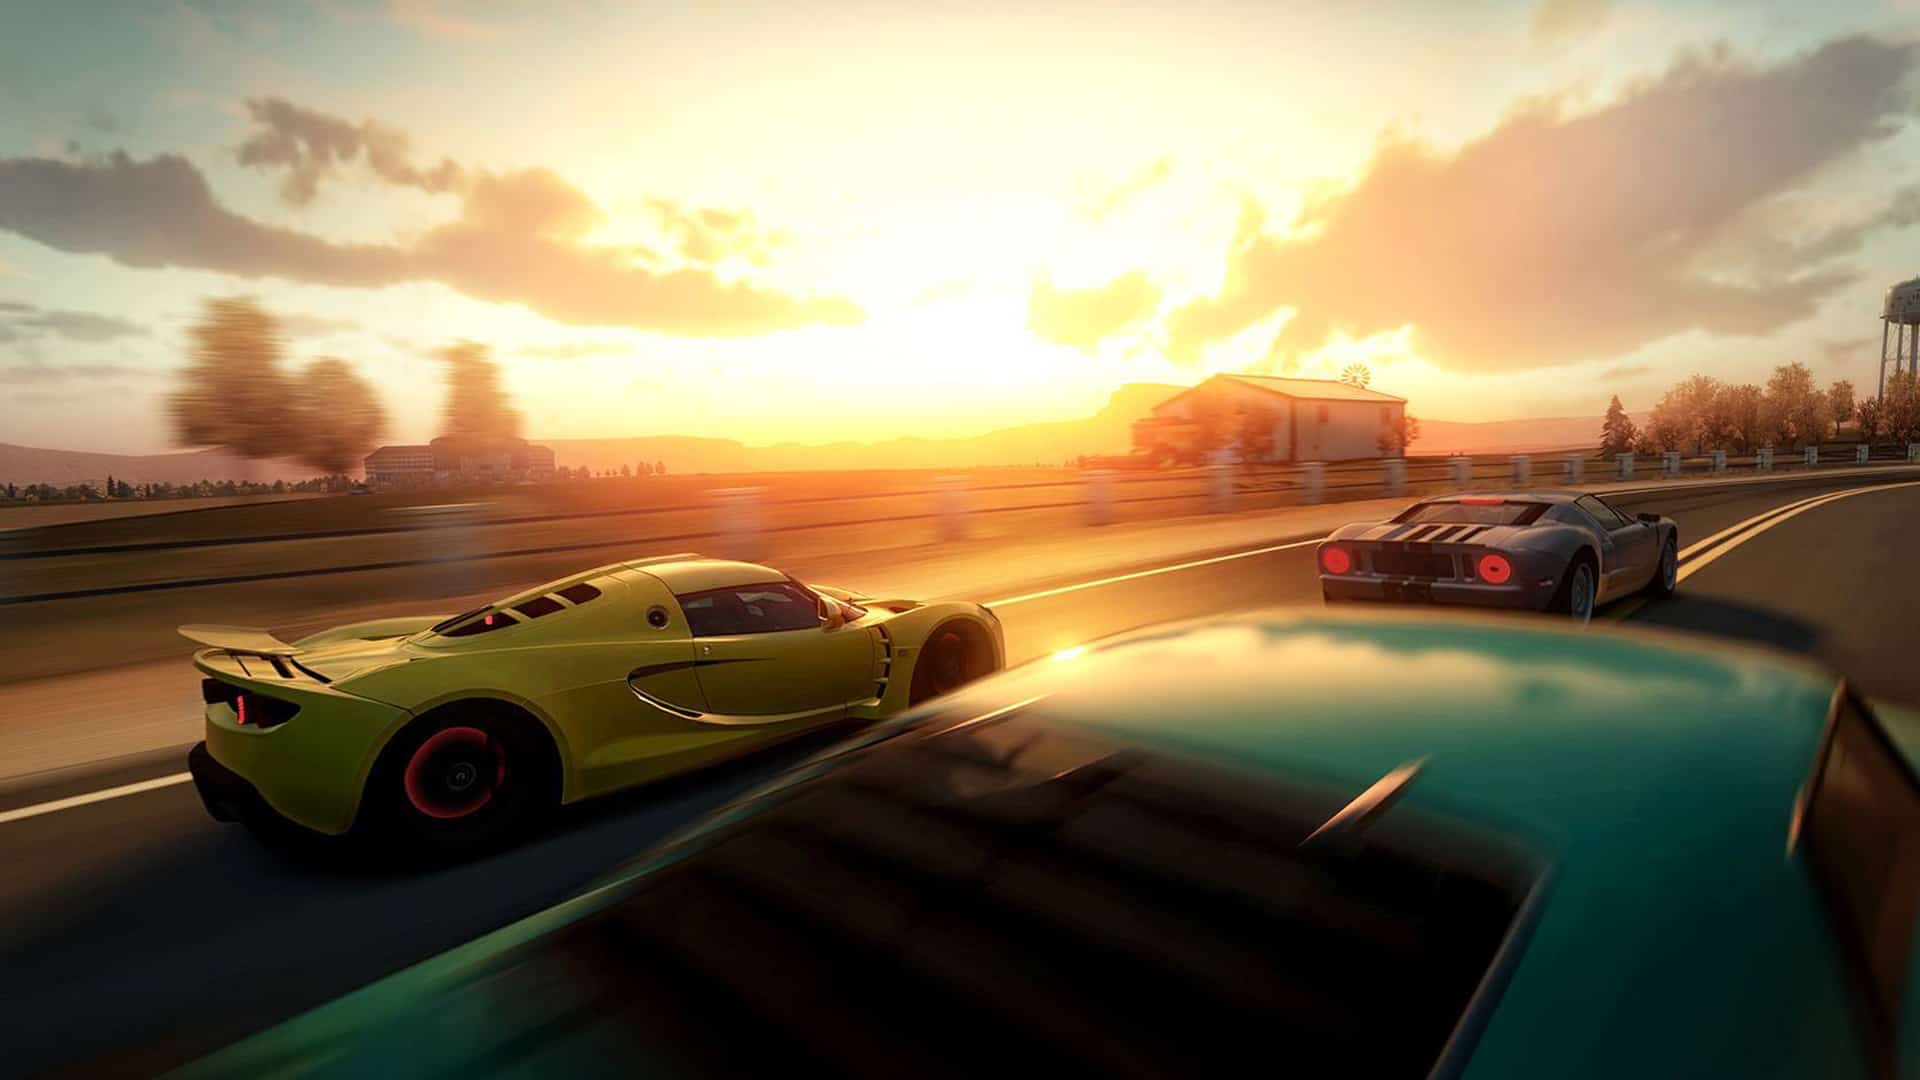 DF Retro: Revisiting the original Need for Speed